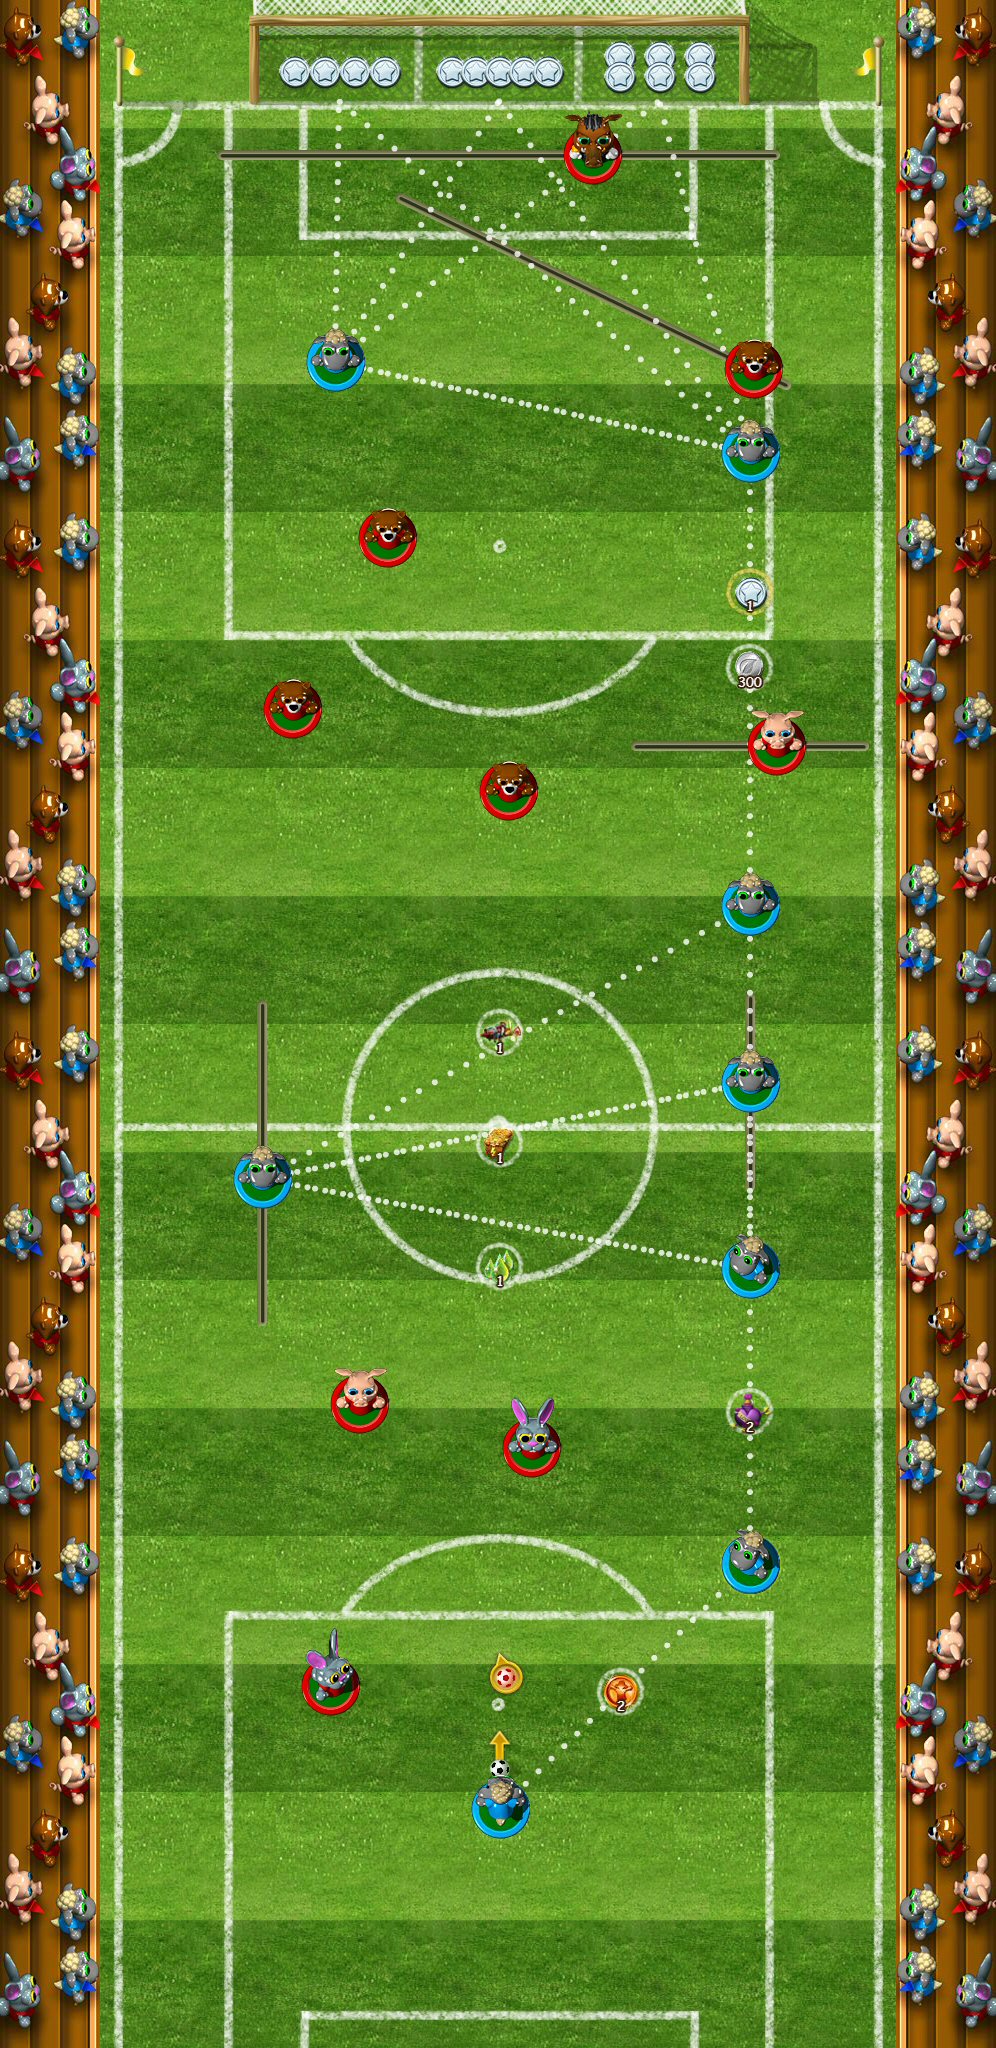 soccerjul2019_layout2.jpg